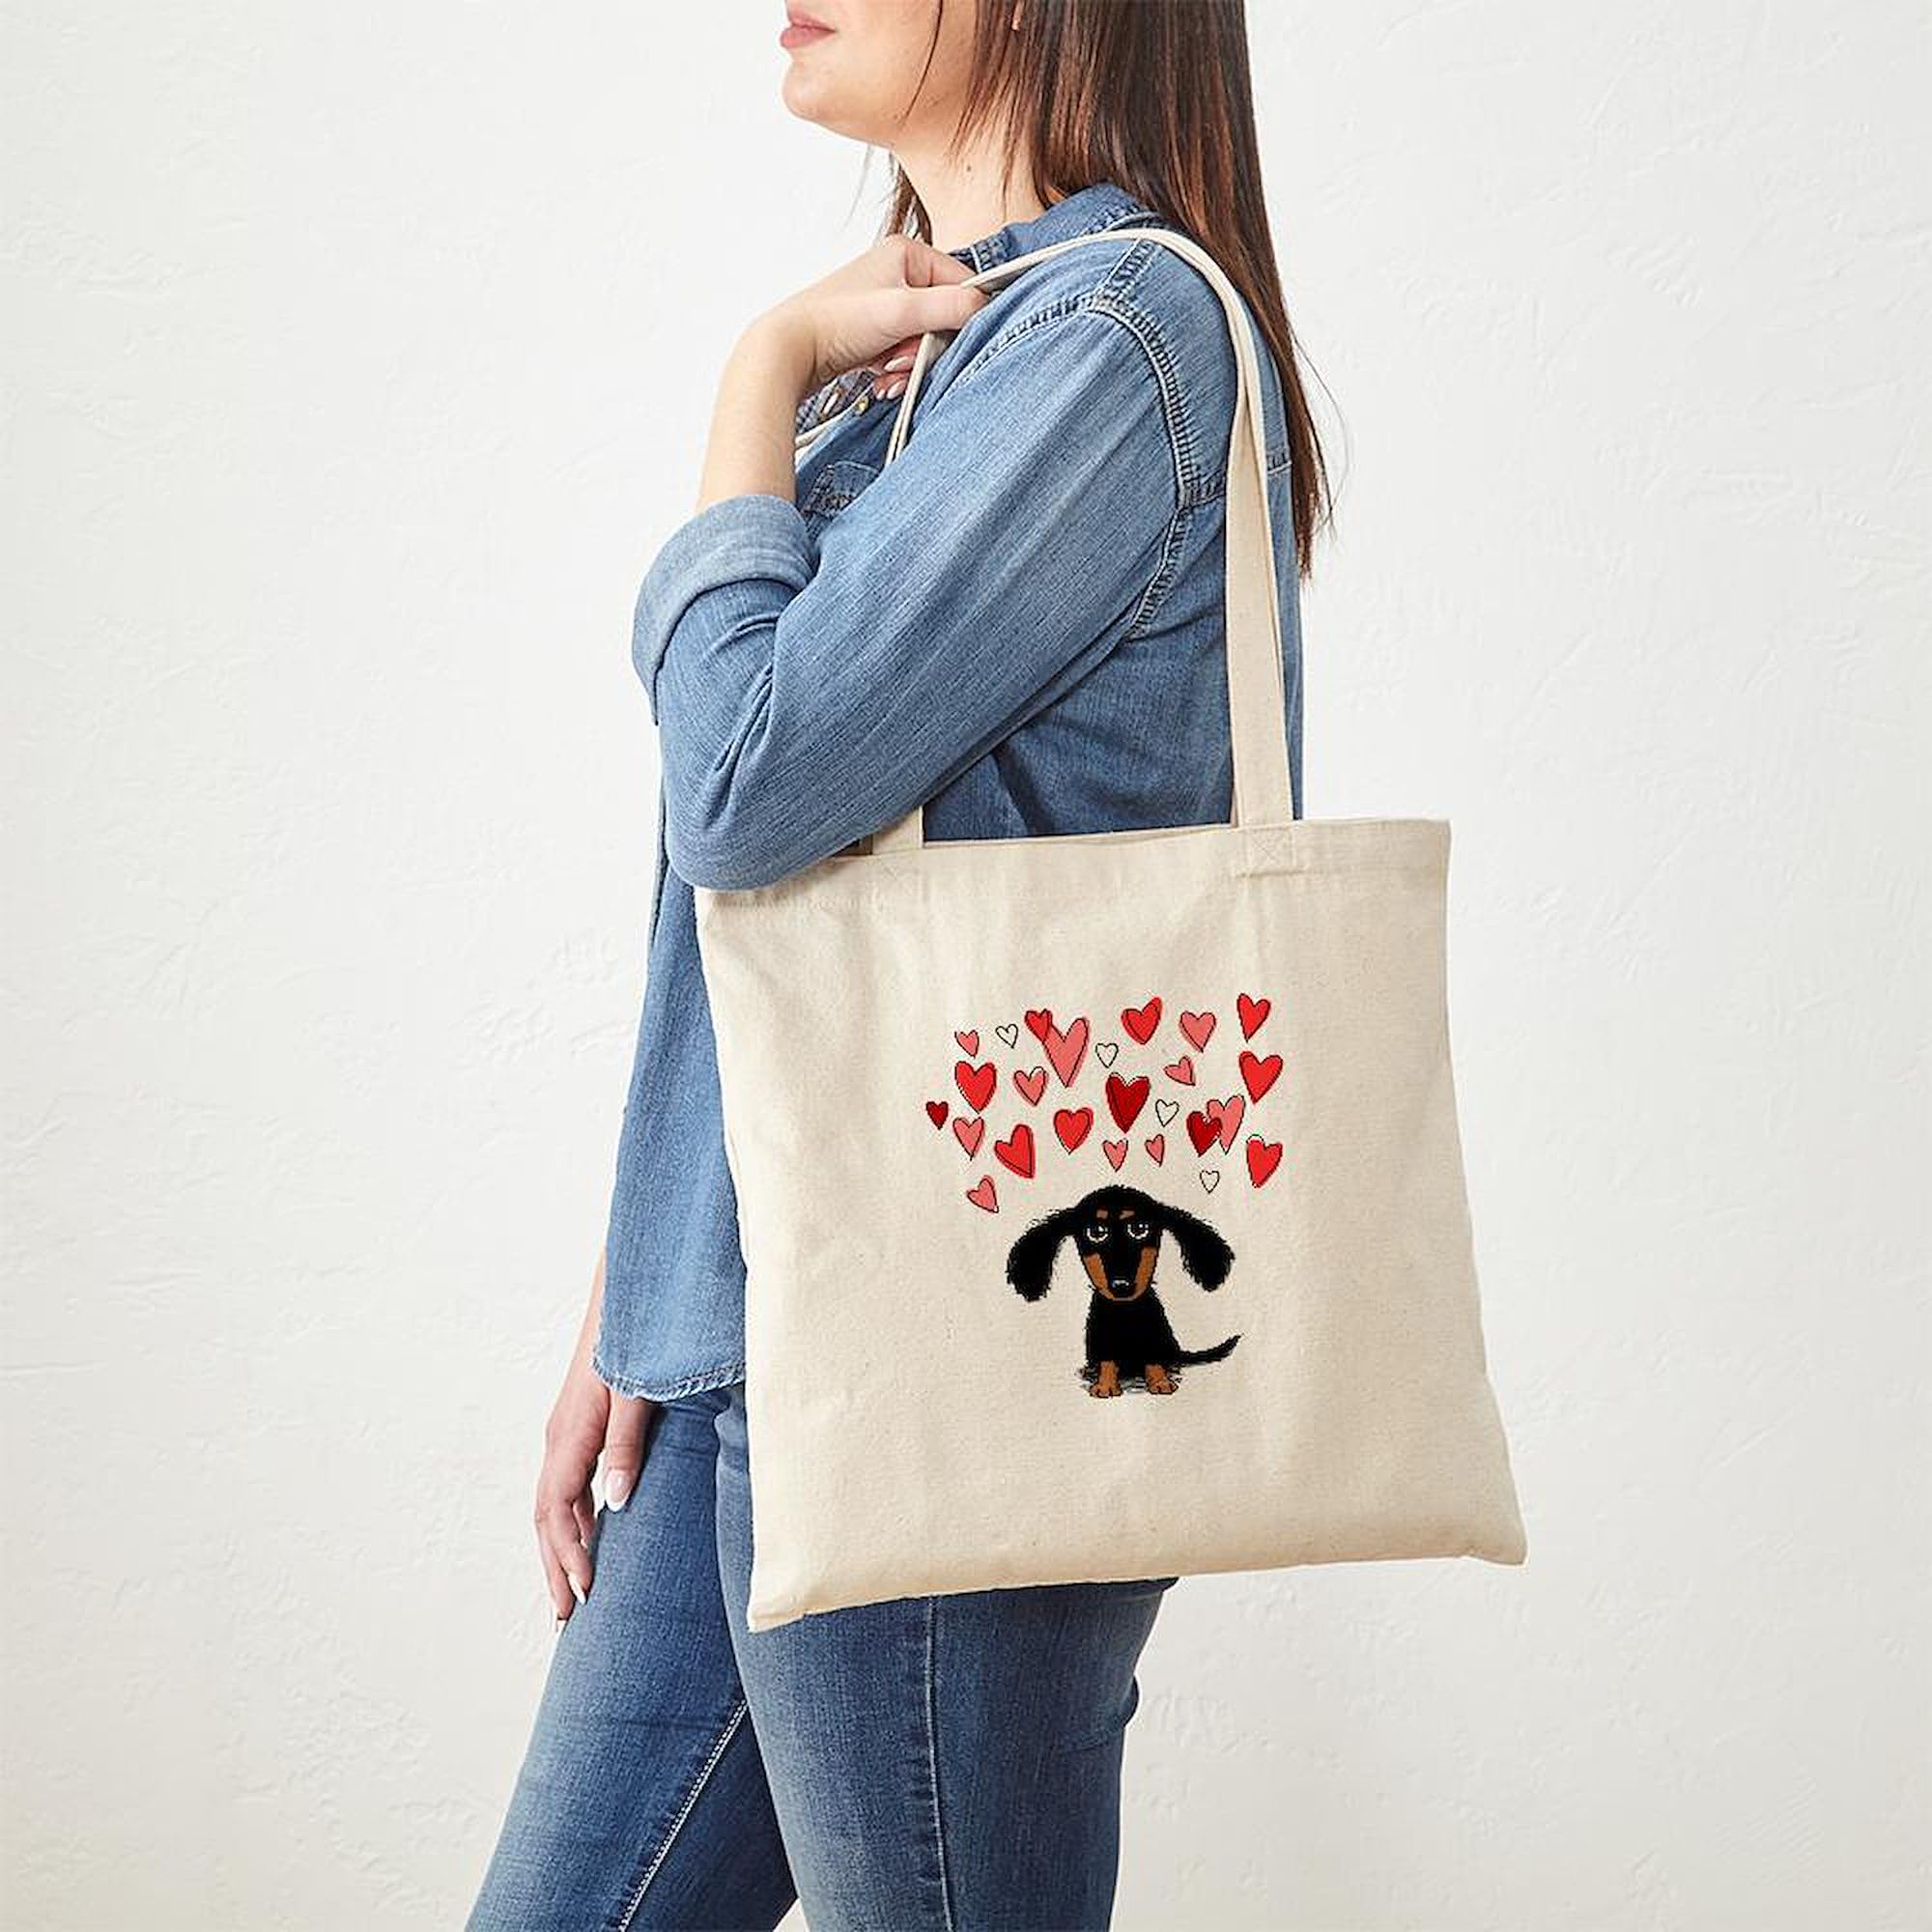 CafePress Cute Dachshund Tote Bag Canvas Tote Shopping Bag